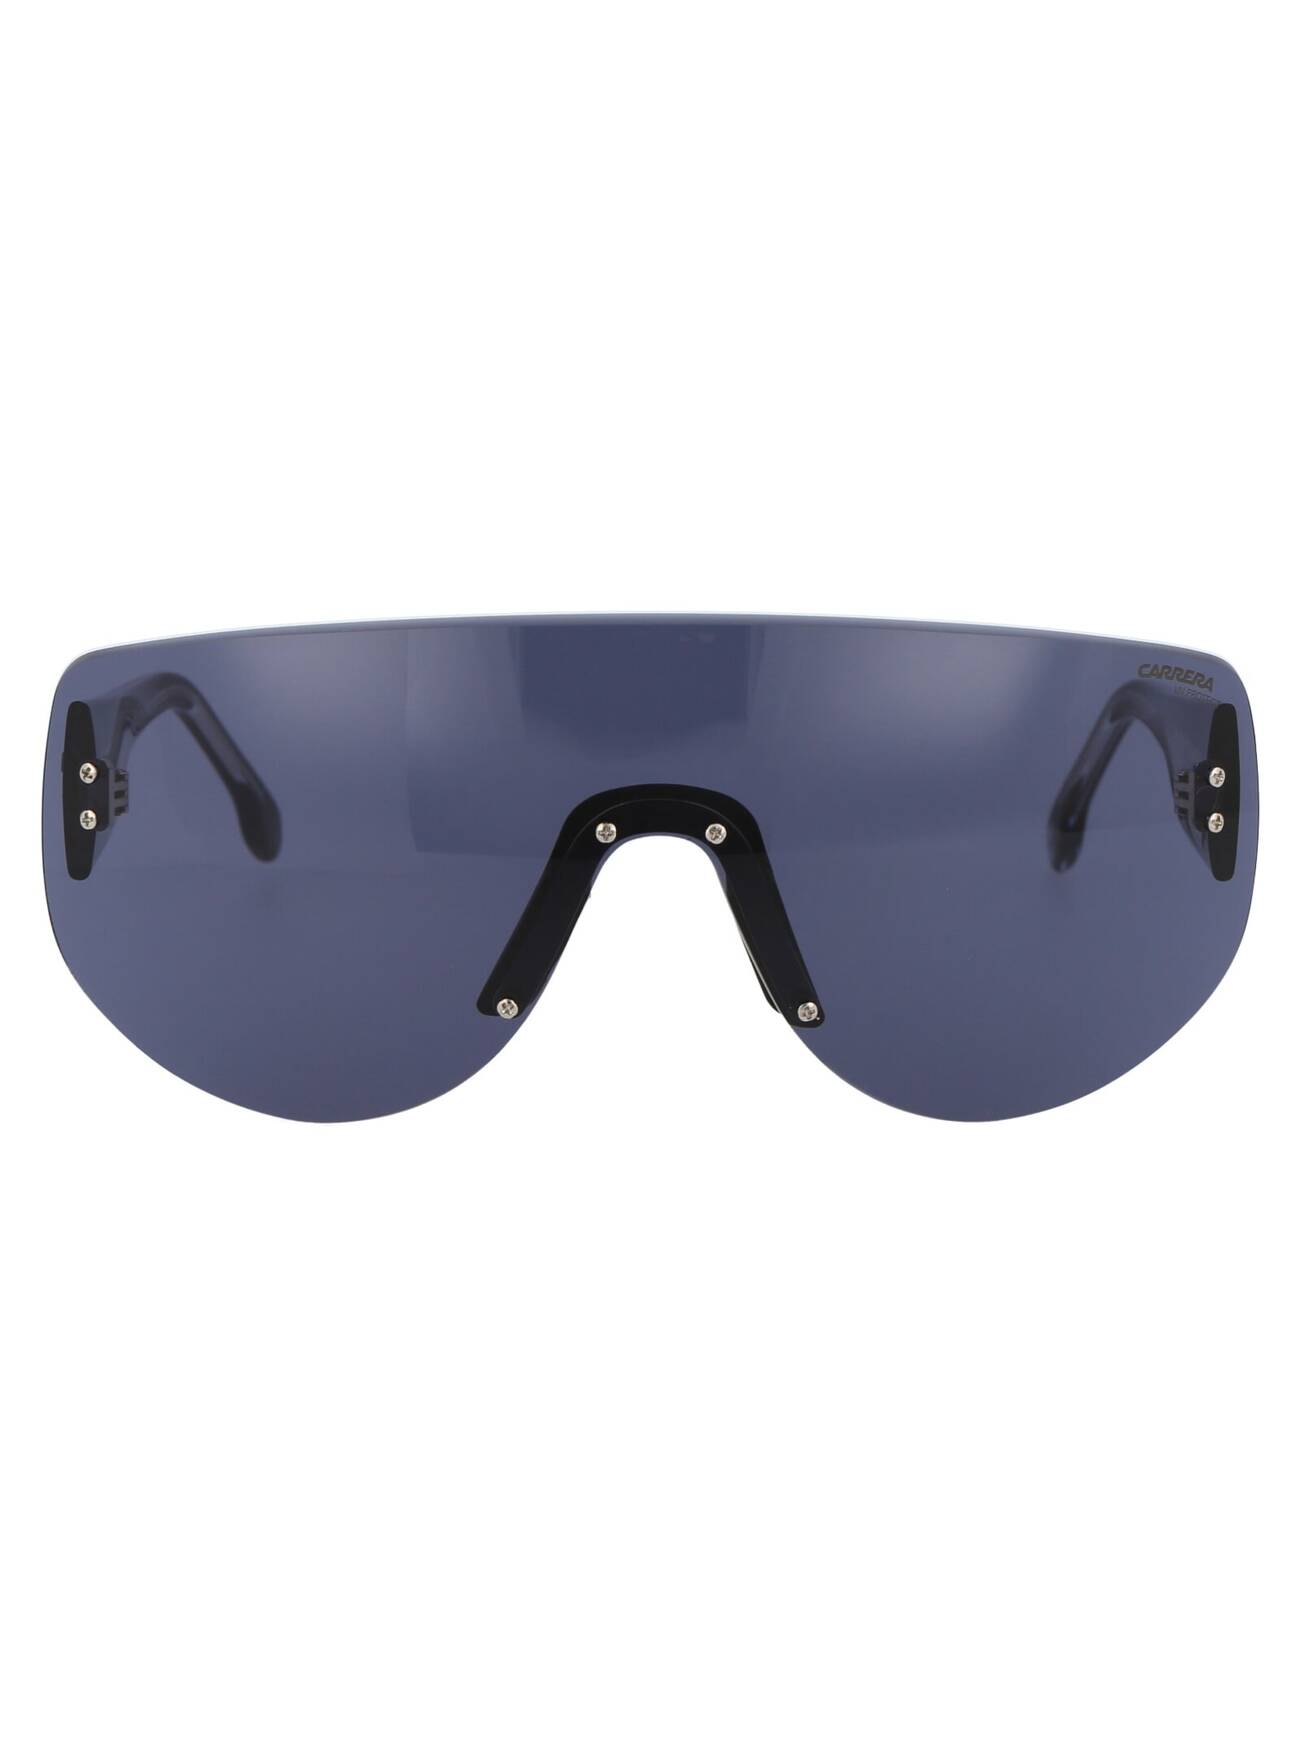 Carrera Flaglab 12 Sunglasses in black